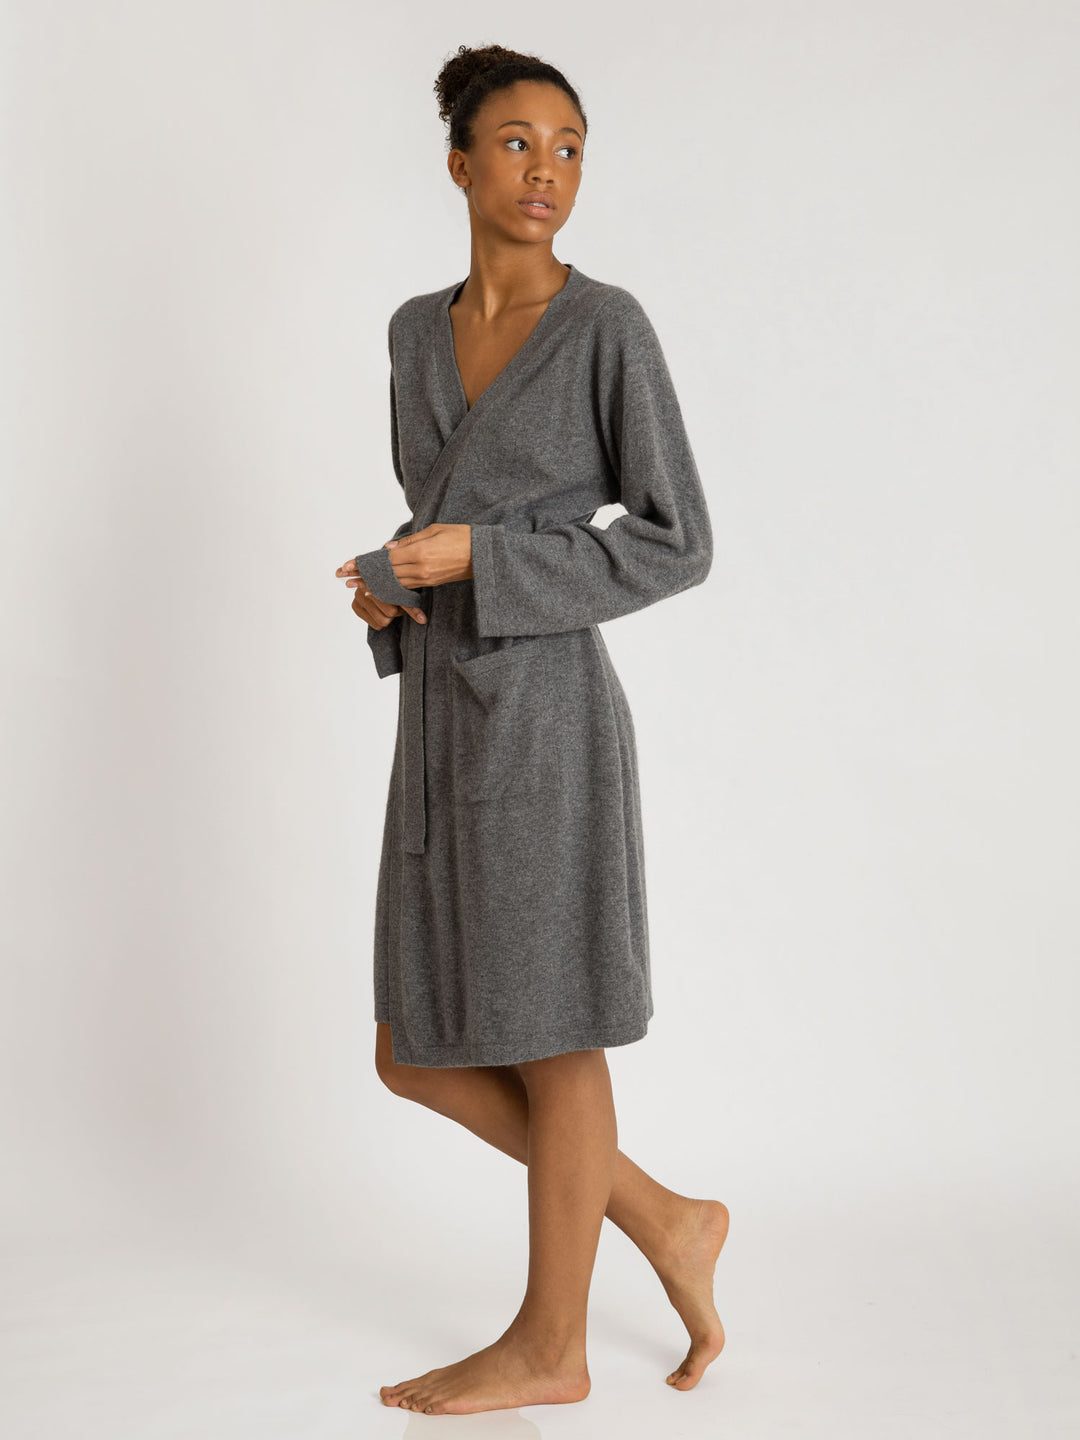 Morning robe Classic in 100% cashmere by Kashmina. Scandinavian design. Color: dark grey.